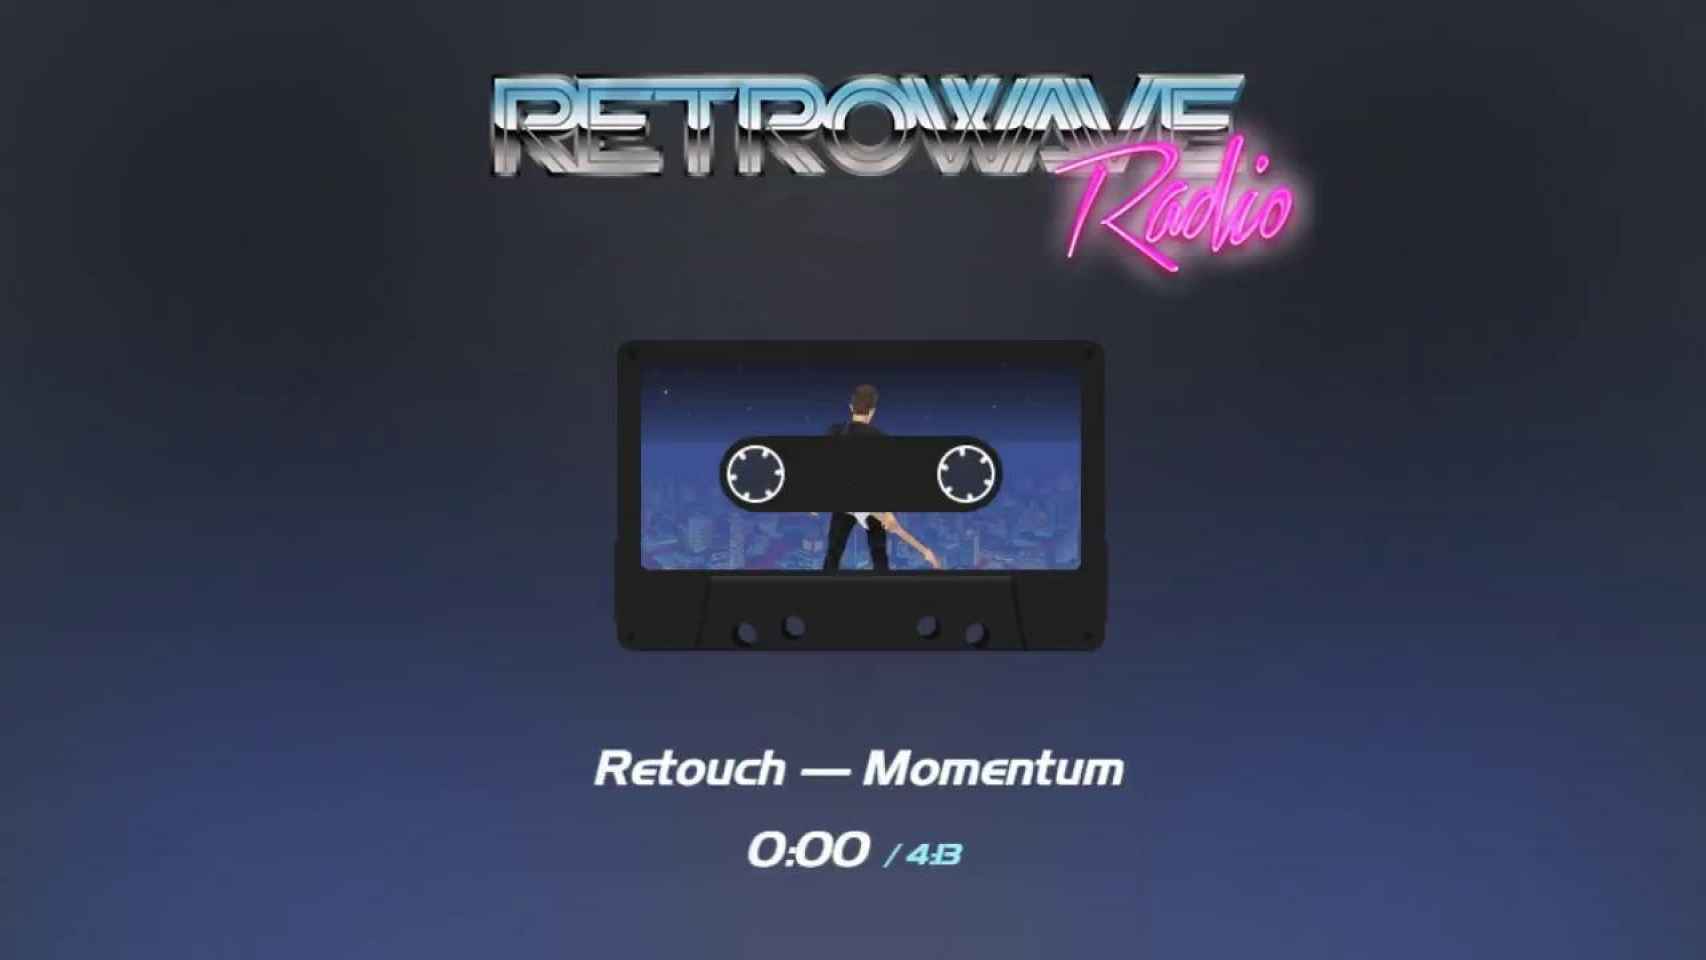 Portada de Retrowave radio / YOUTUBE